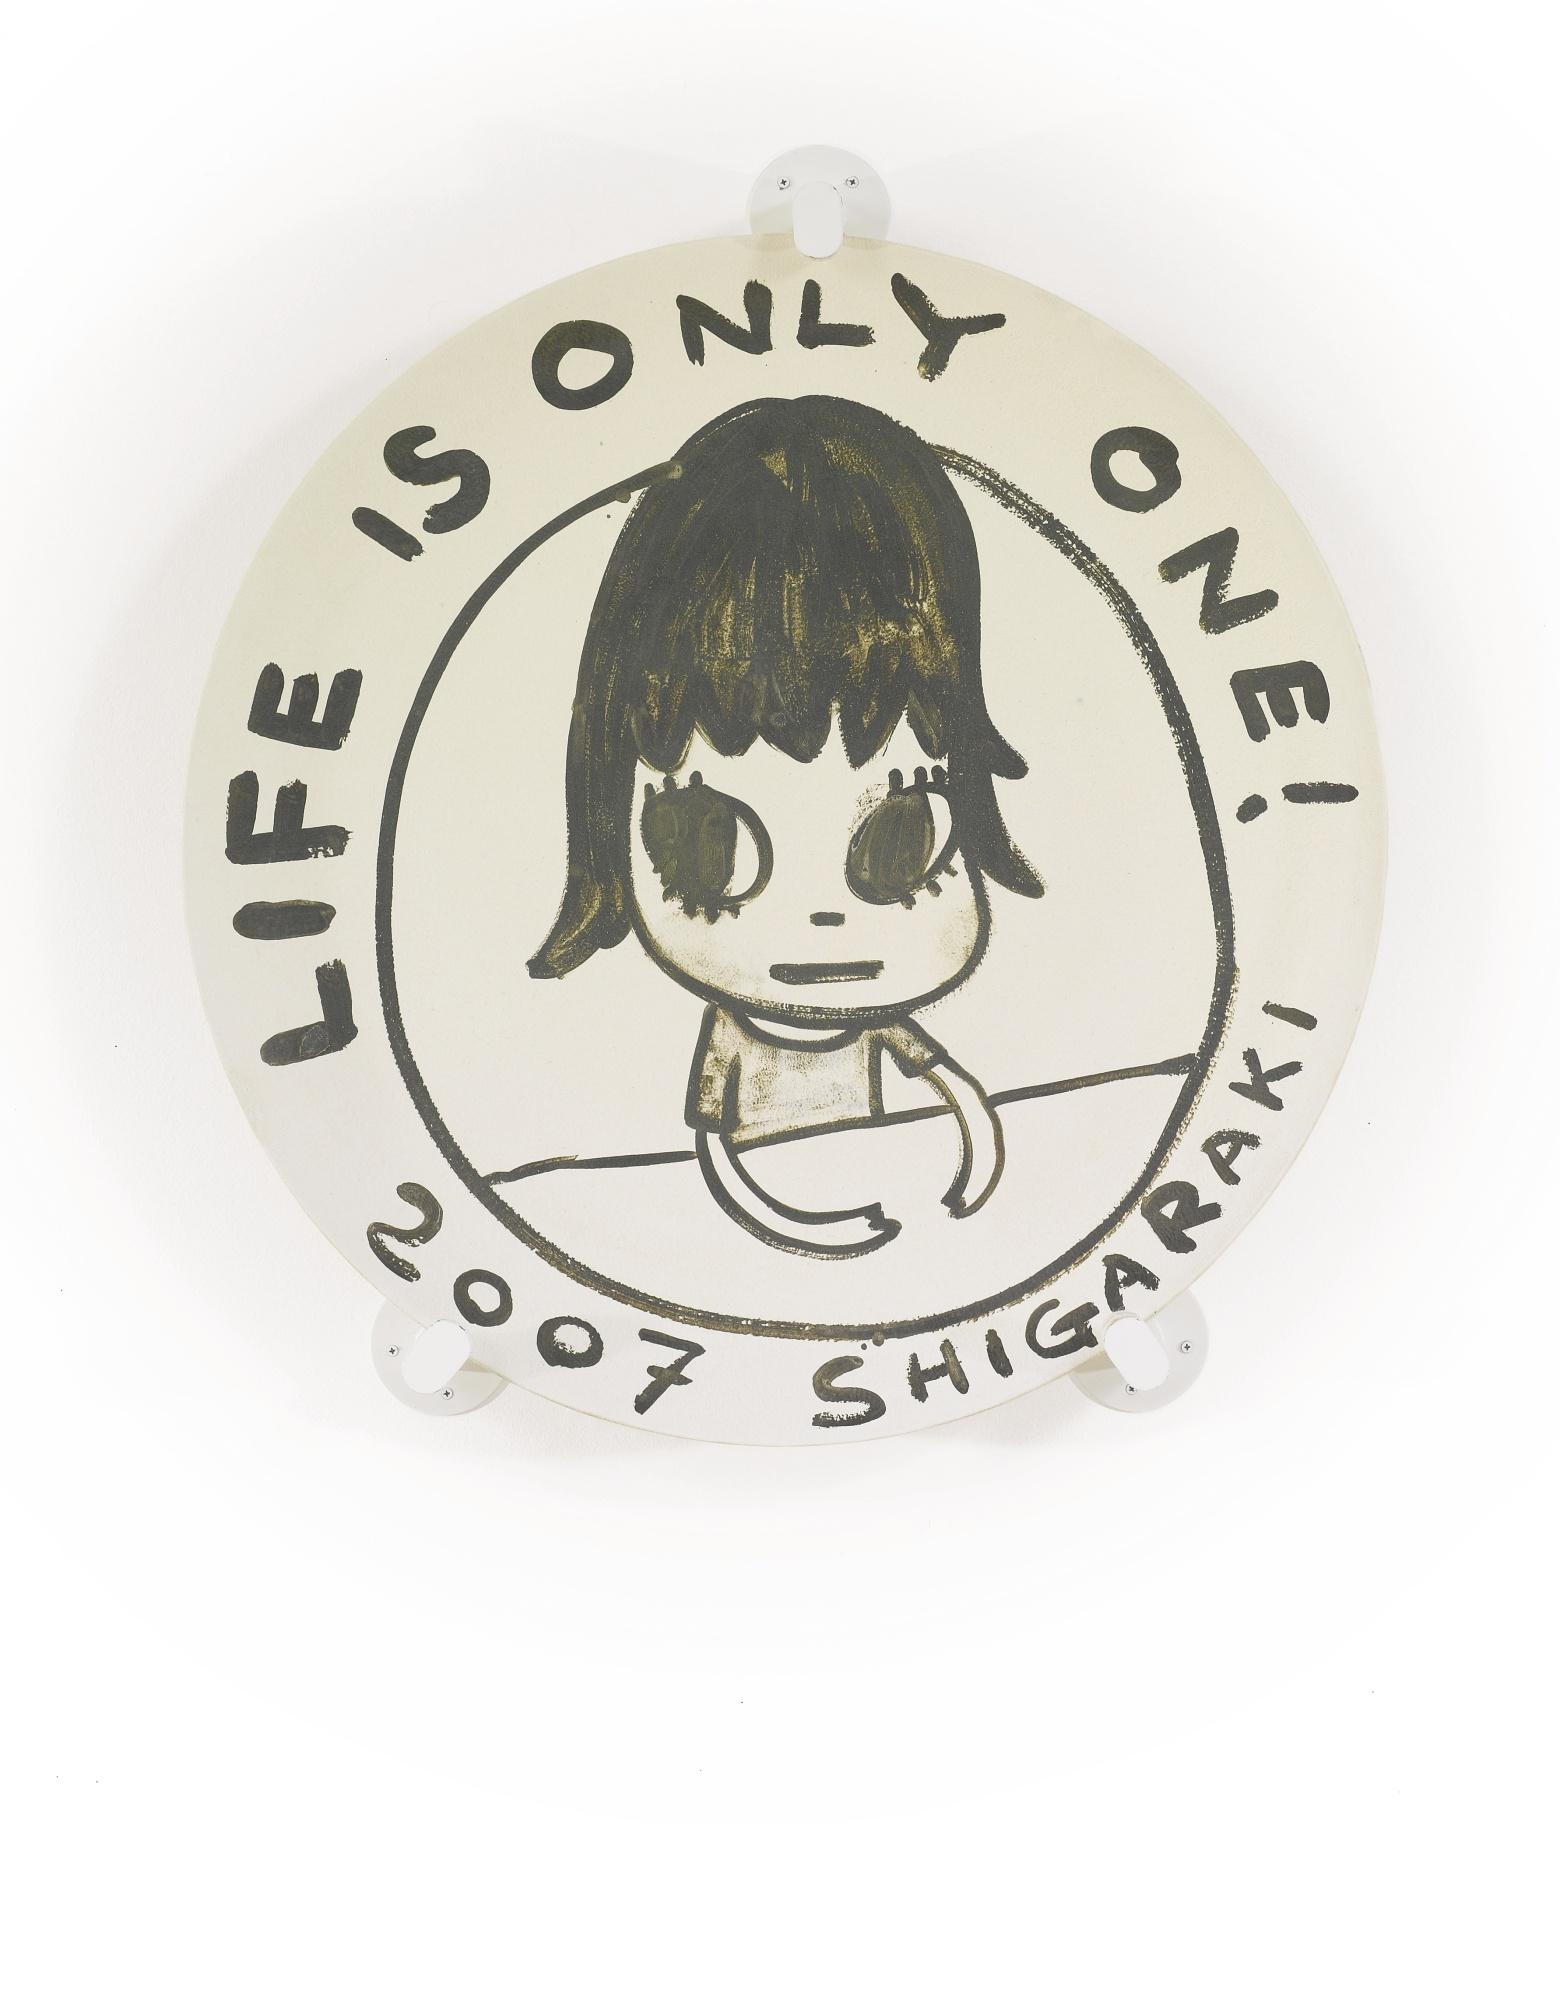 Yoshitomo Nara, Life is Only One! (2007)